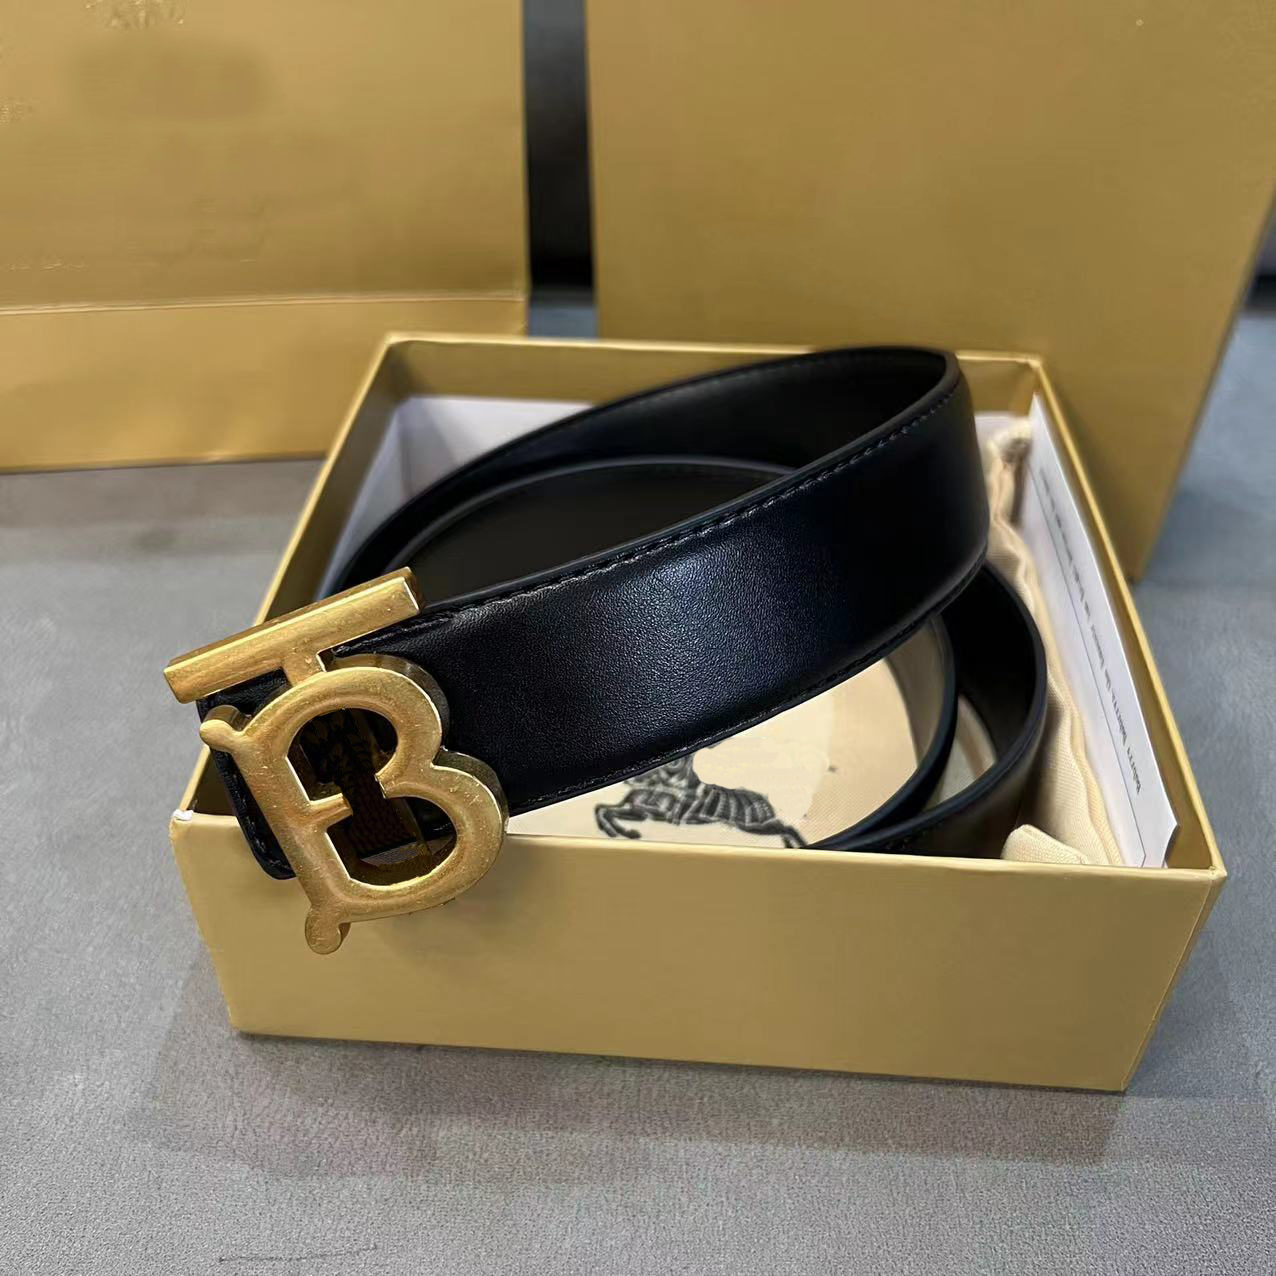 Designer Belt Luxury Men Classic Pin Buckle Letter v Belts Gold and Silver Black Head Striped Casual Width 4cm Size 105-125cm Fashion Versatile Good Gift